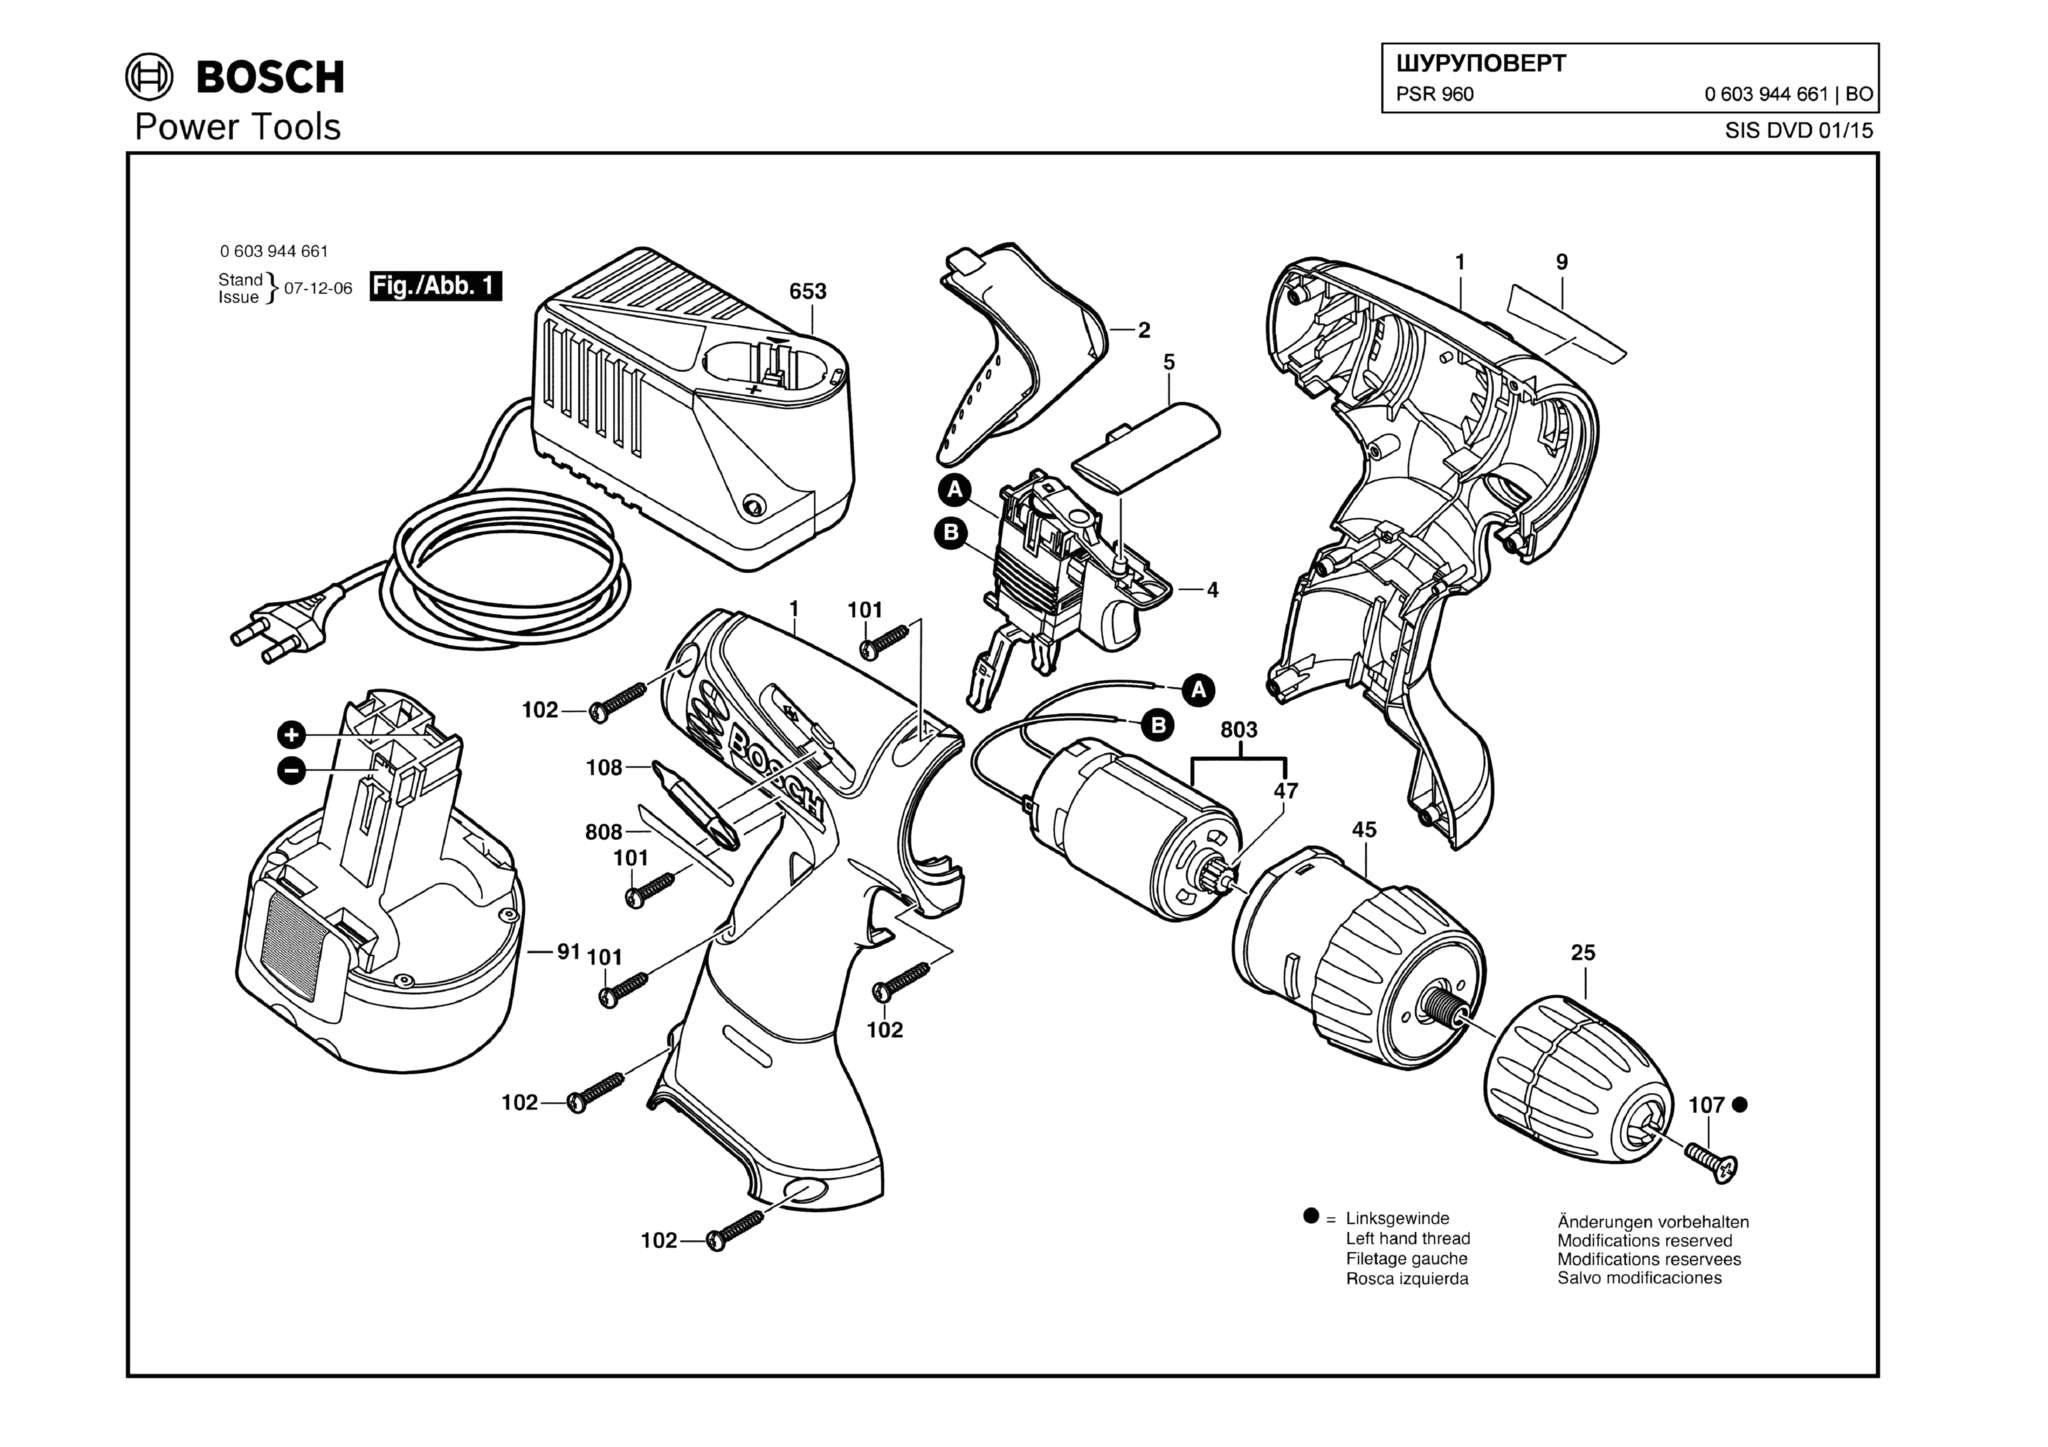 Запчасти, схема и деталировка Bosch PSR 960 (ТИП 0603944661)